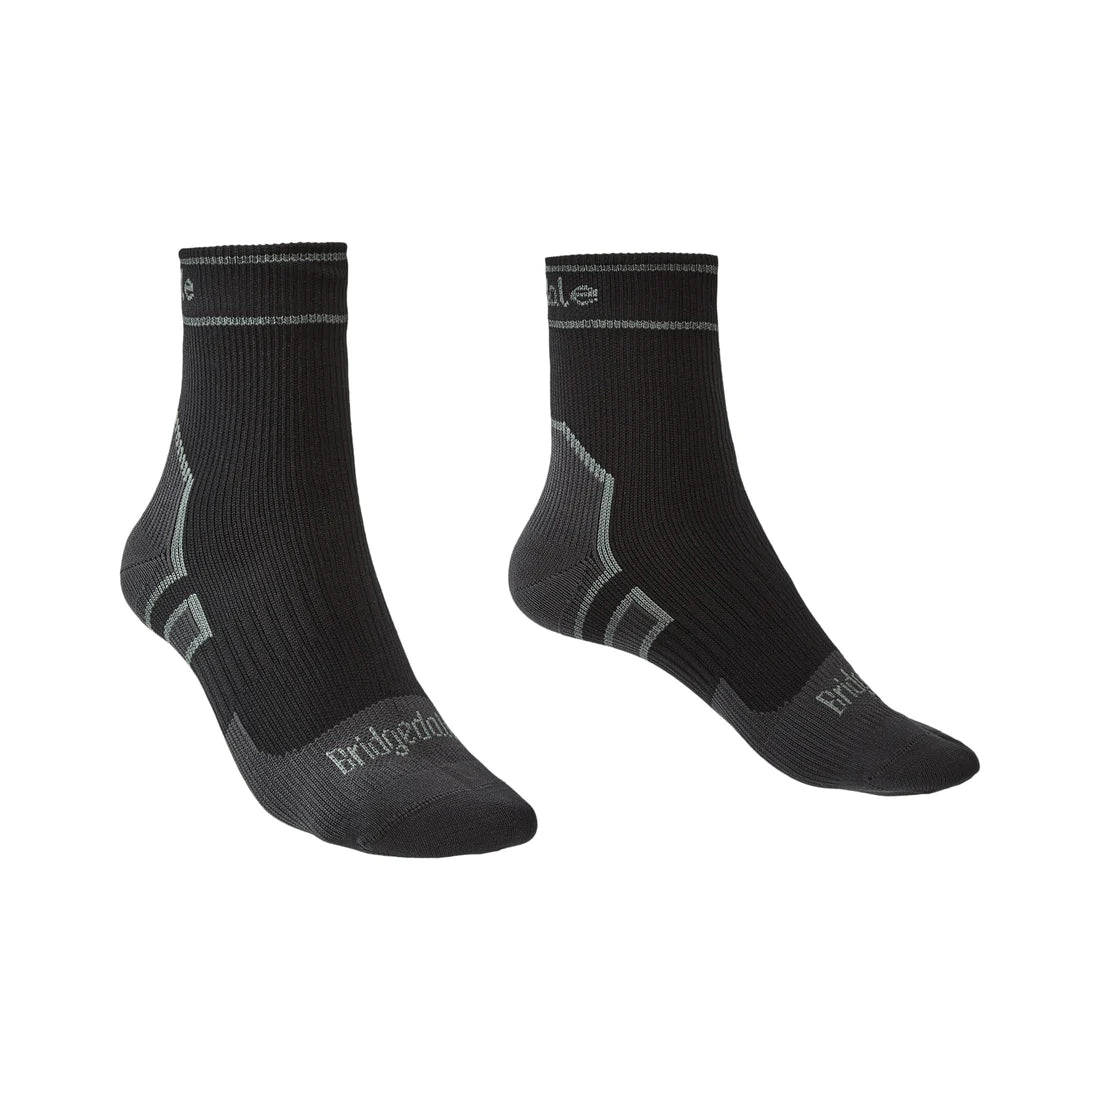 Bridgedale Storm Lightweight Waterproof Sock -  - Mansfield Hunting & Fishing - Products to prepare for Corona Virus